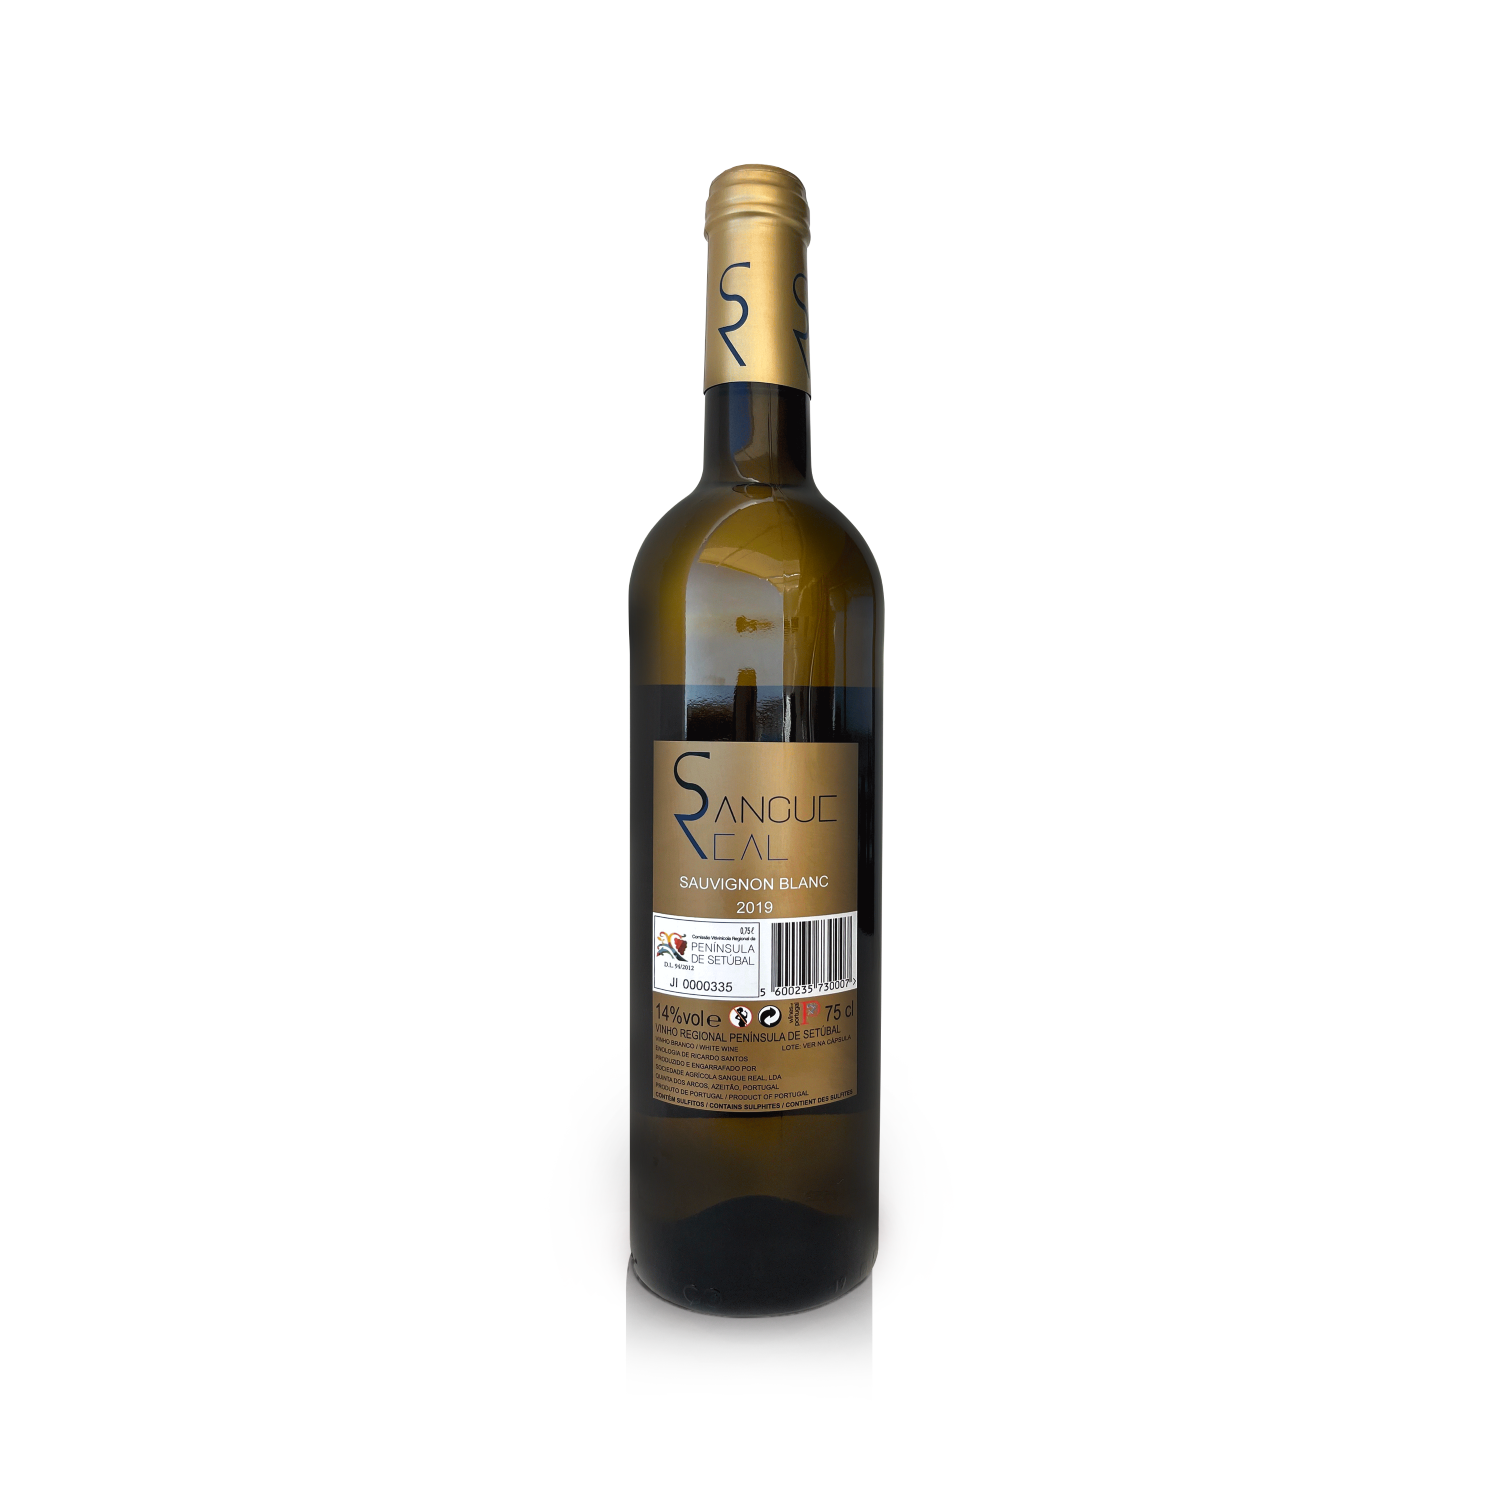 Sangue Real Sauvignon Blanc 2019 - seventy9north.co.uk